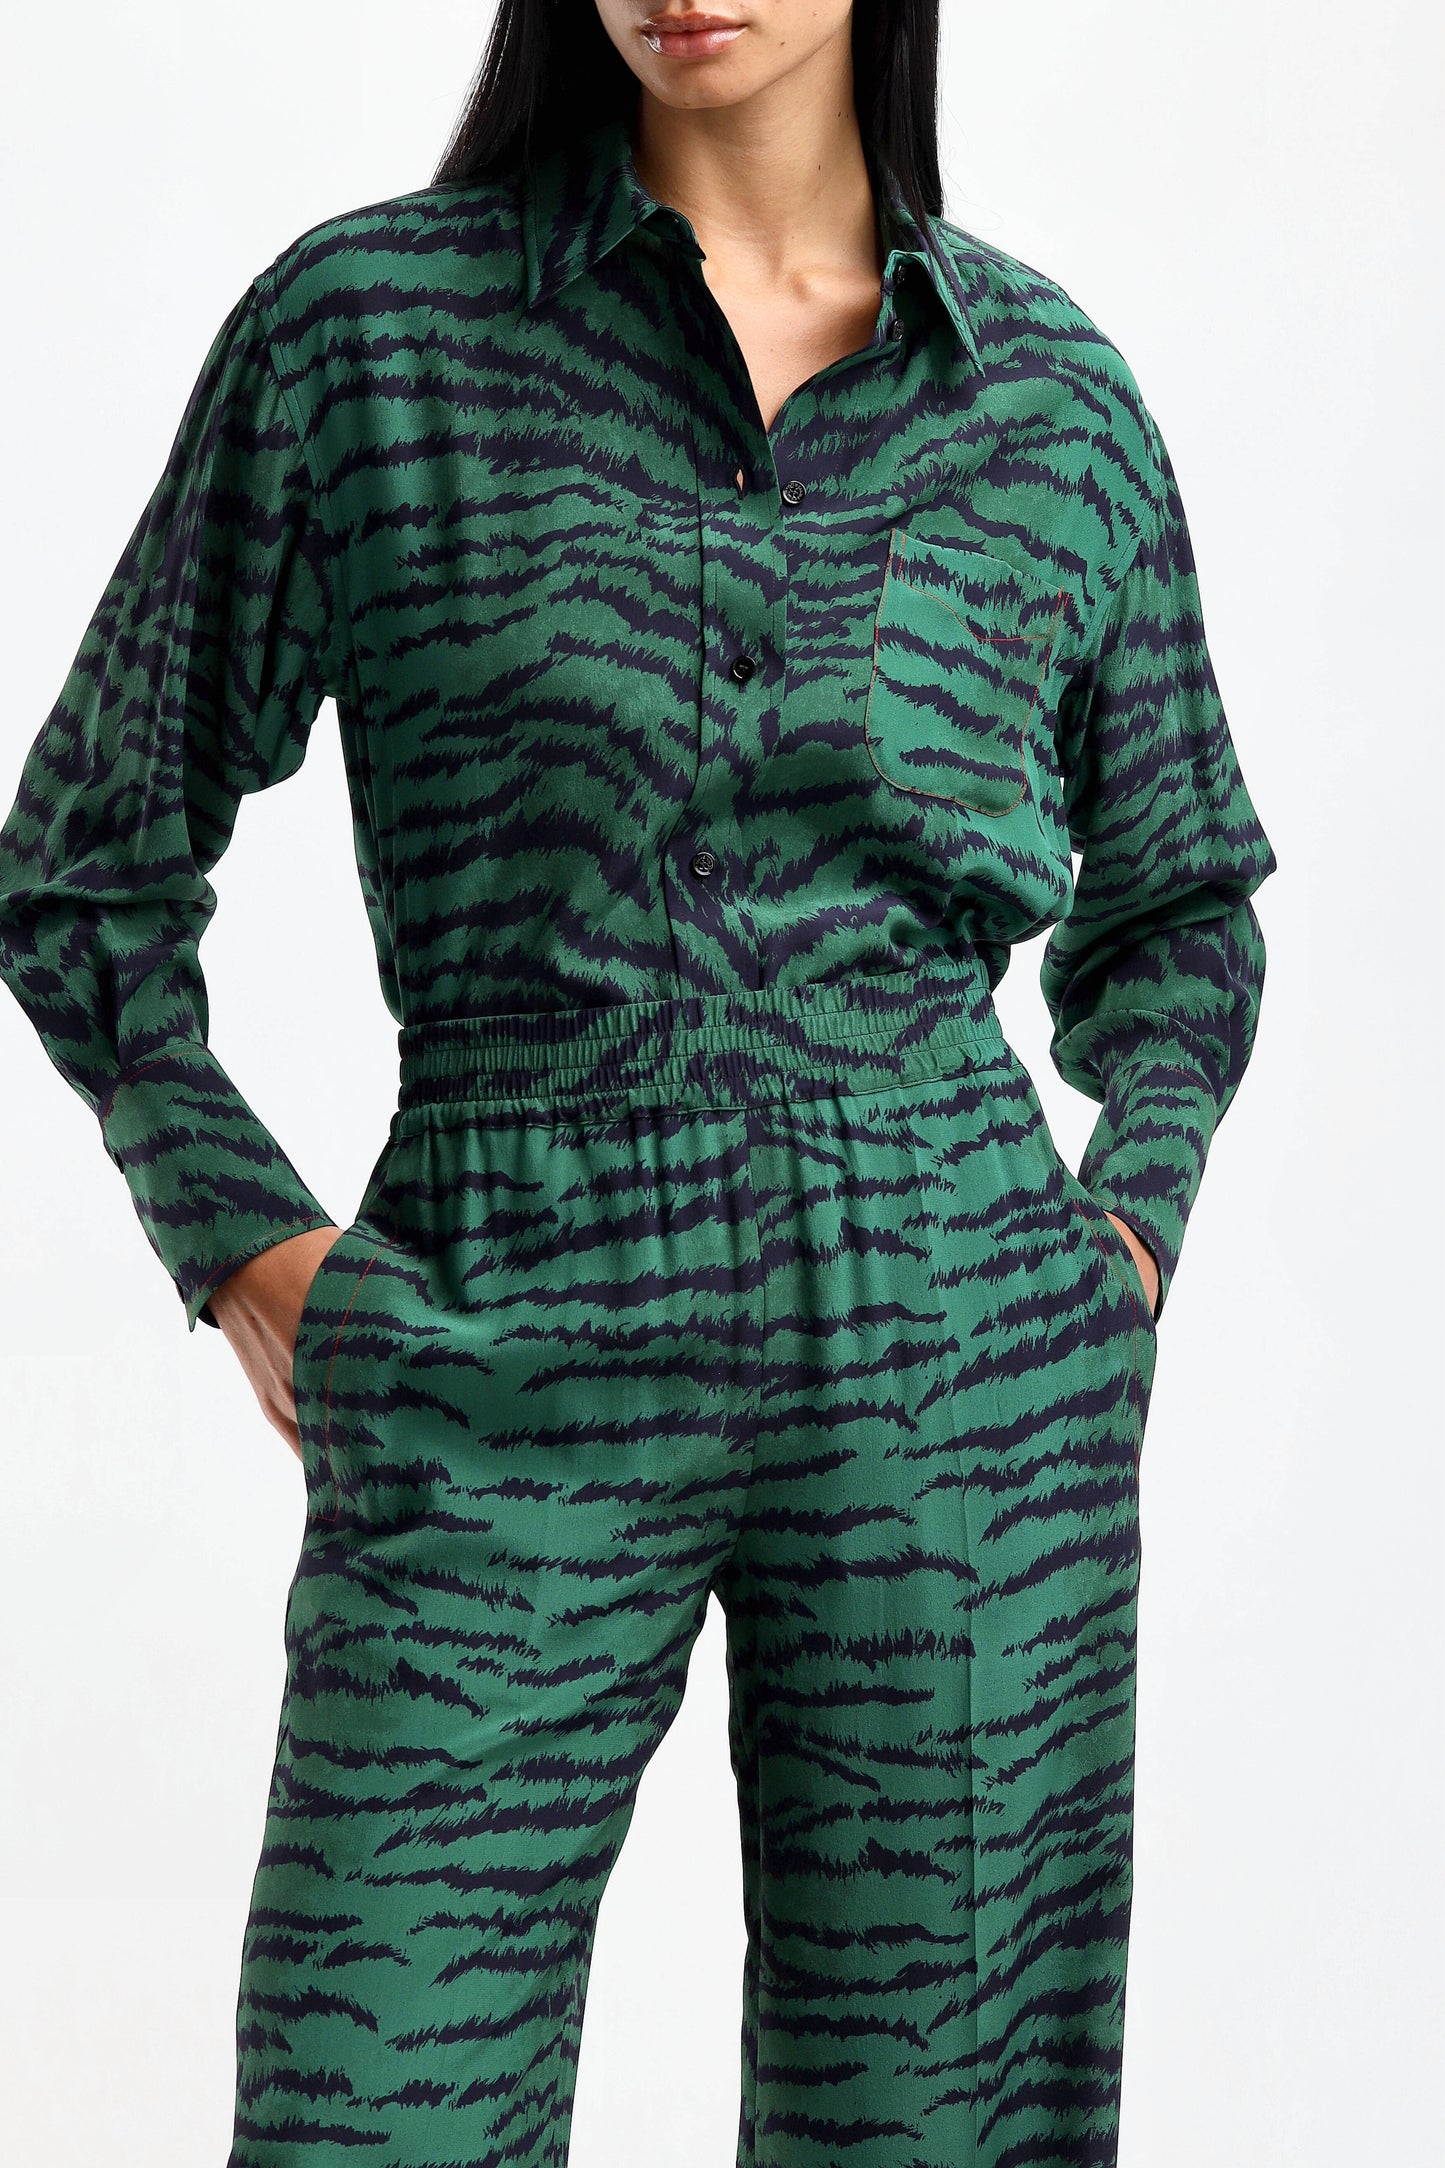 Bluse Pyjama in Grün/NavyVictoria Beckham - Anita Hass